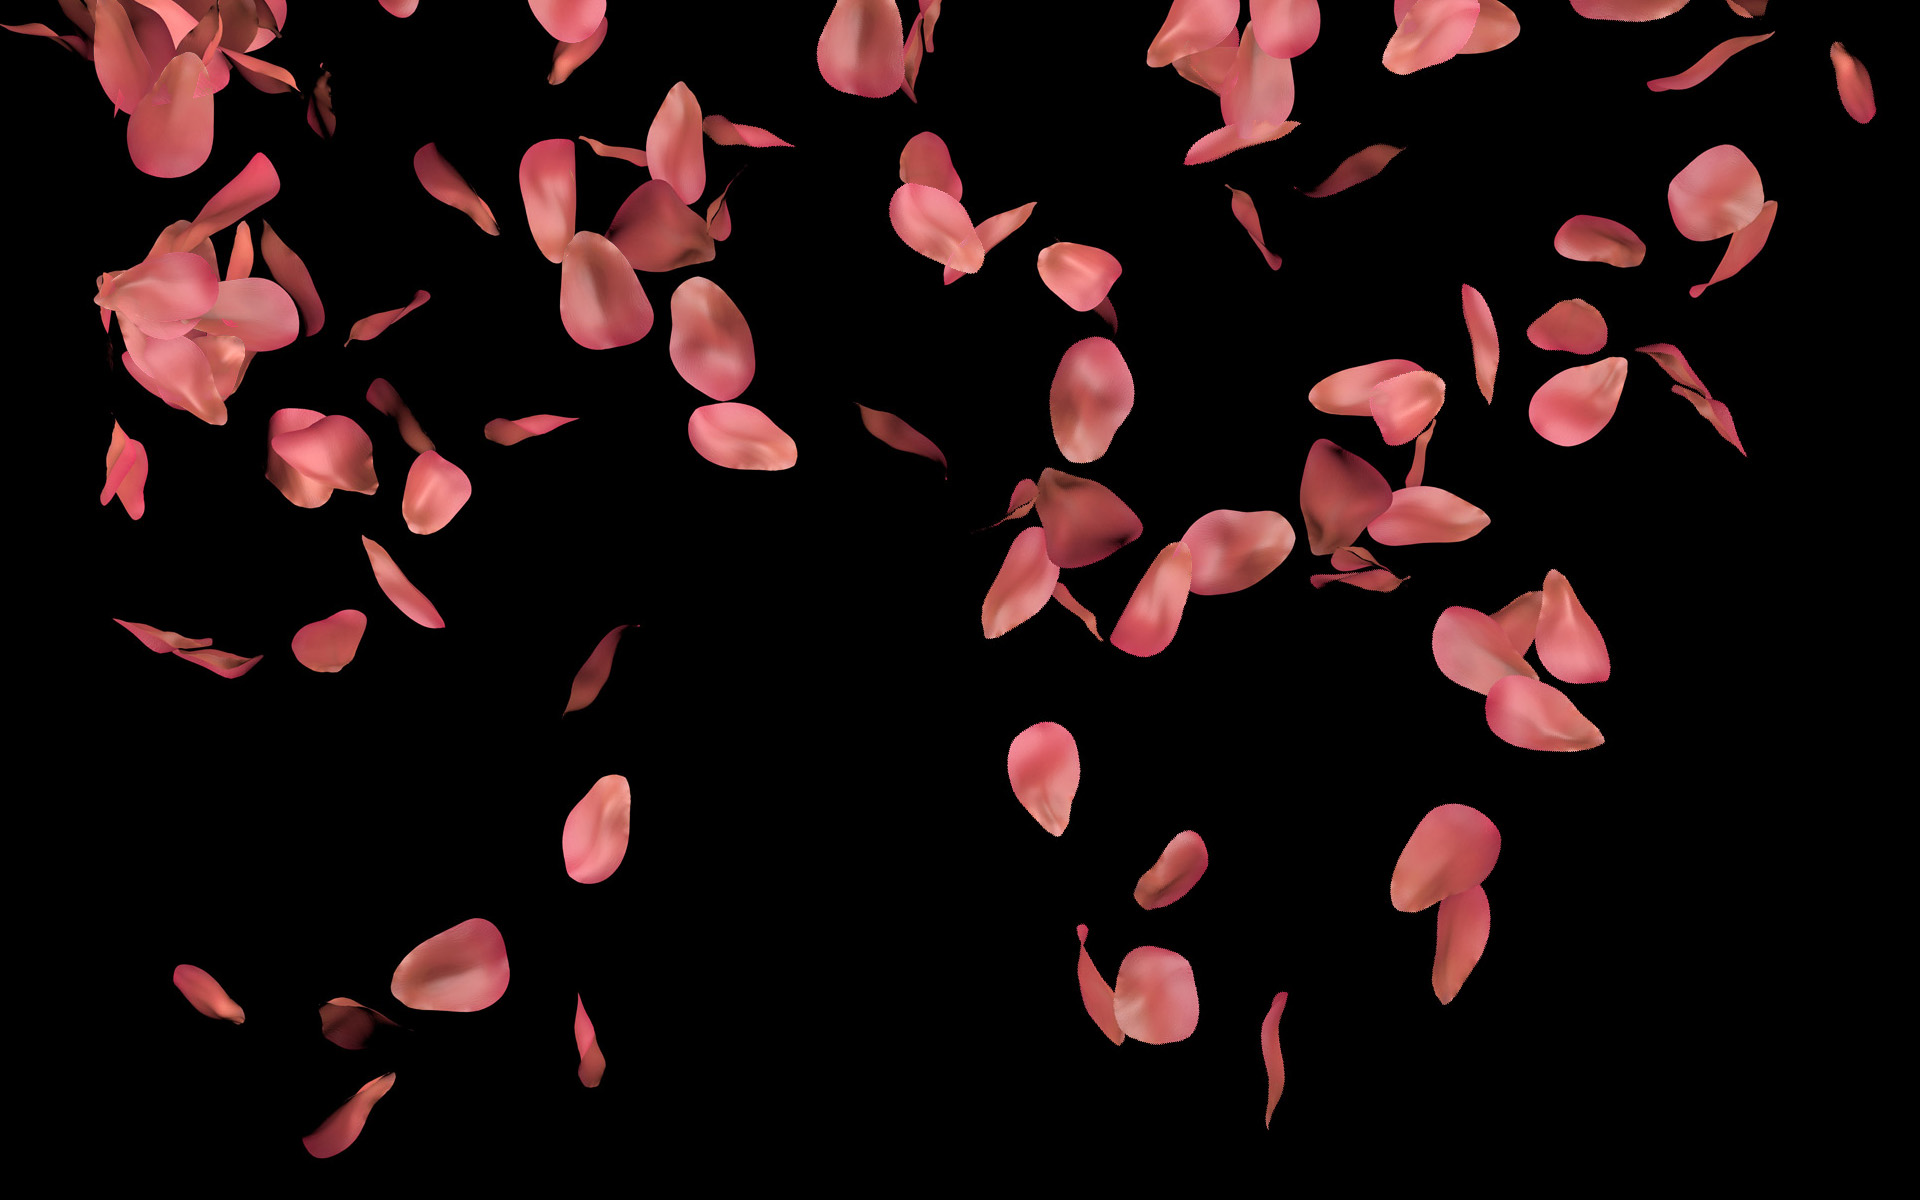 Rose petals with water drops Wallpaper 4k Ultra HD ID:11334